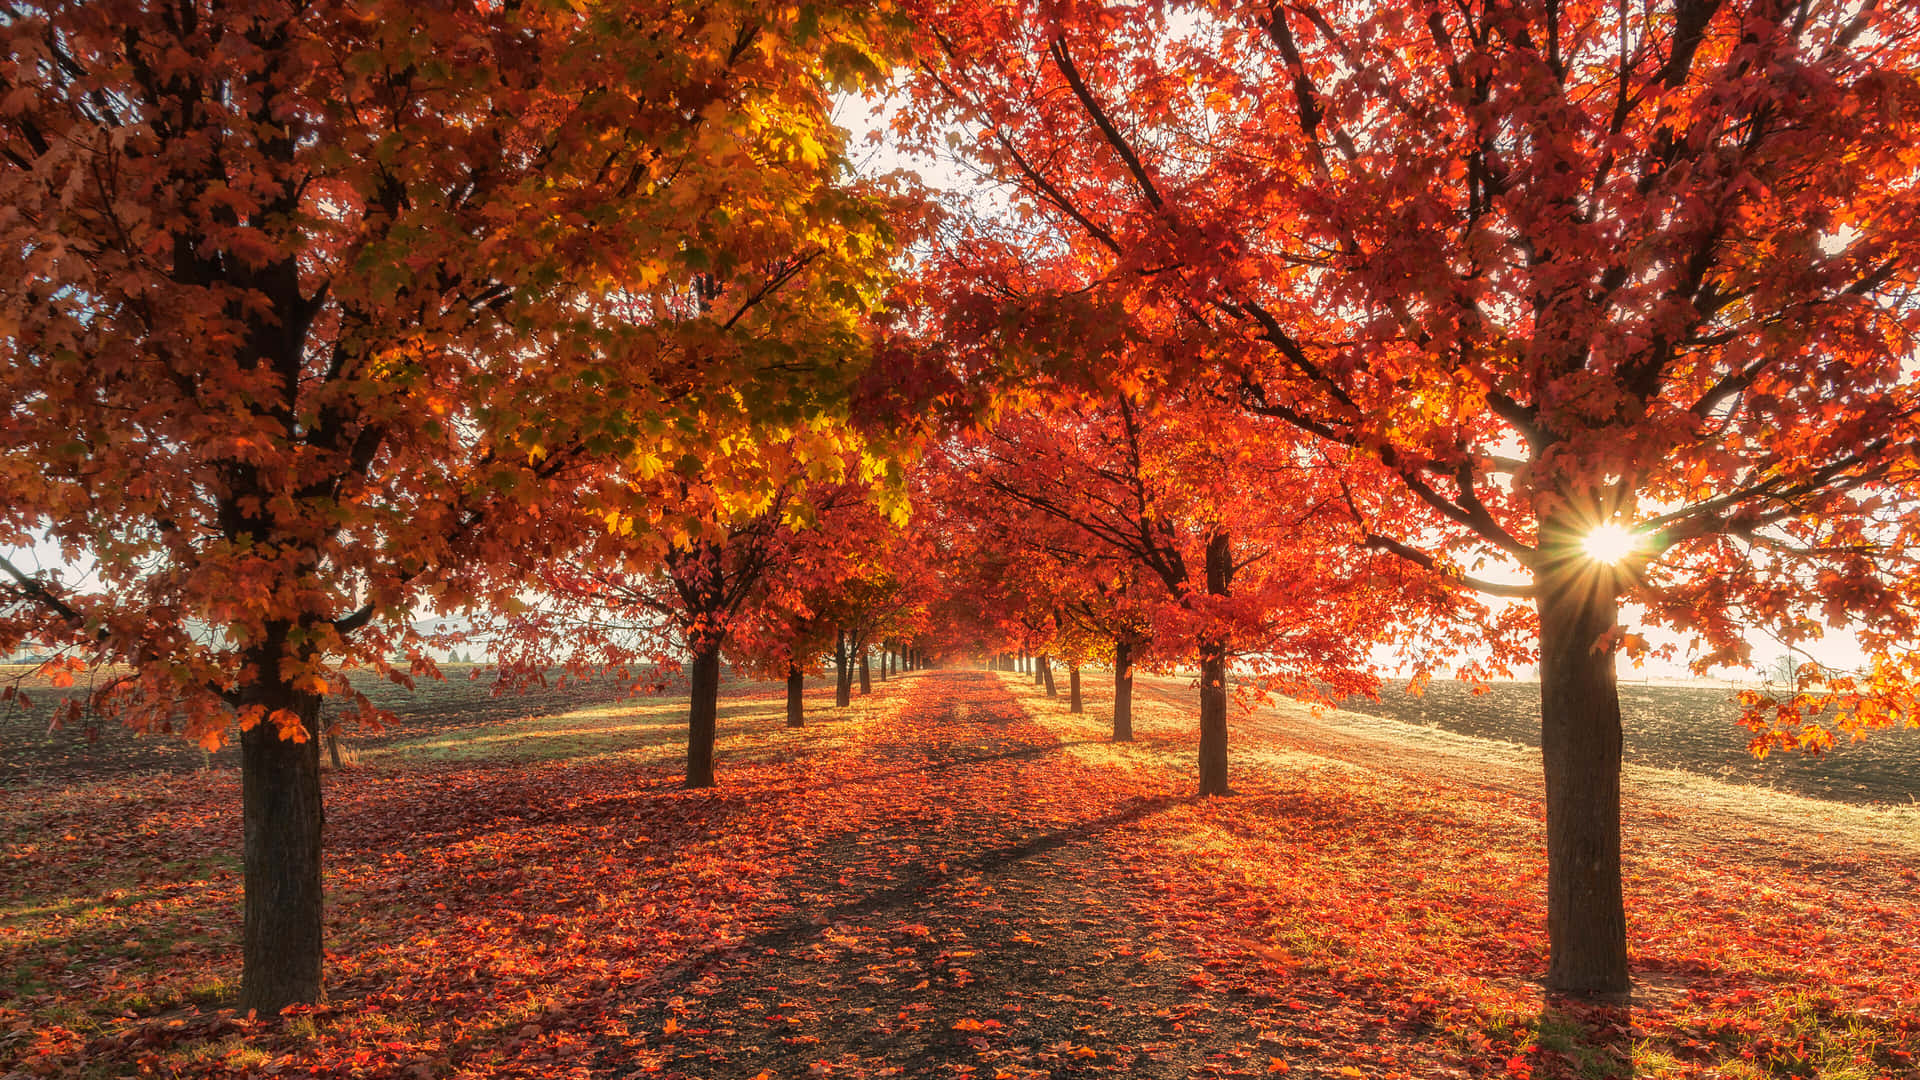 Vibrant Autumn Scenery